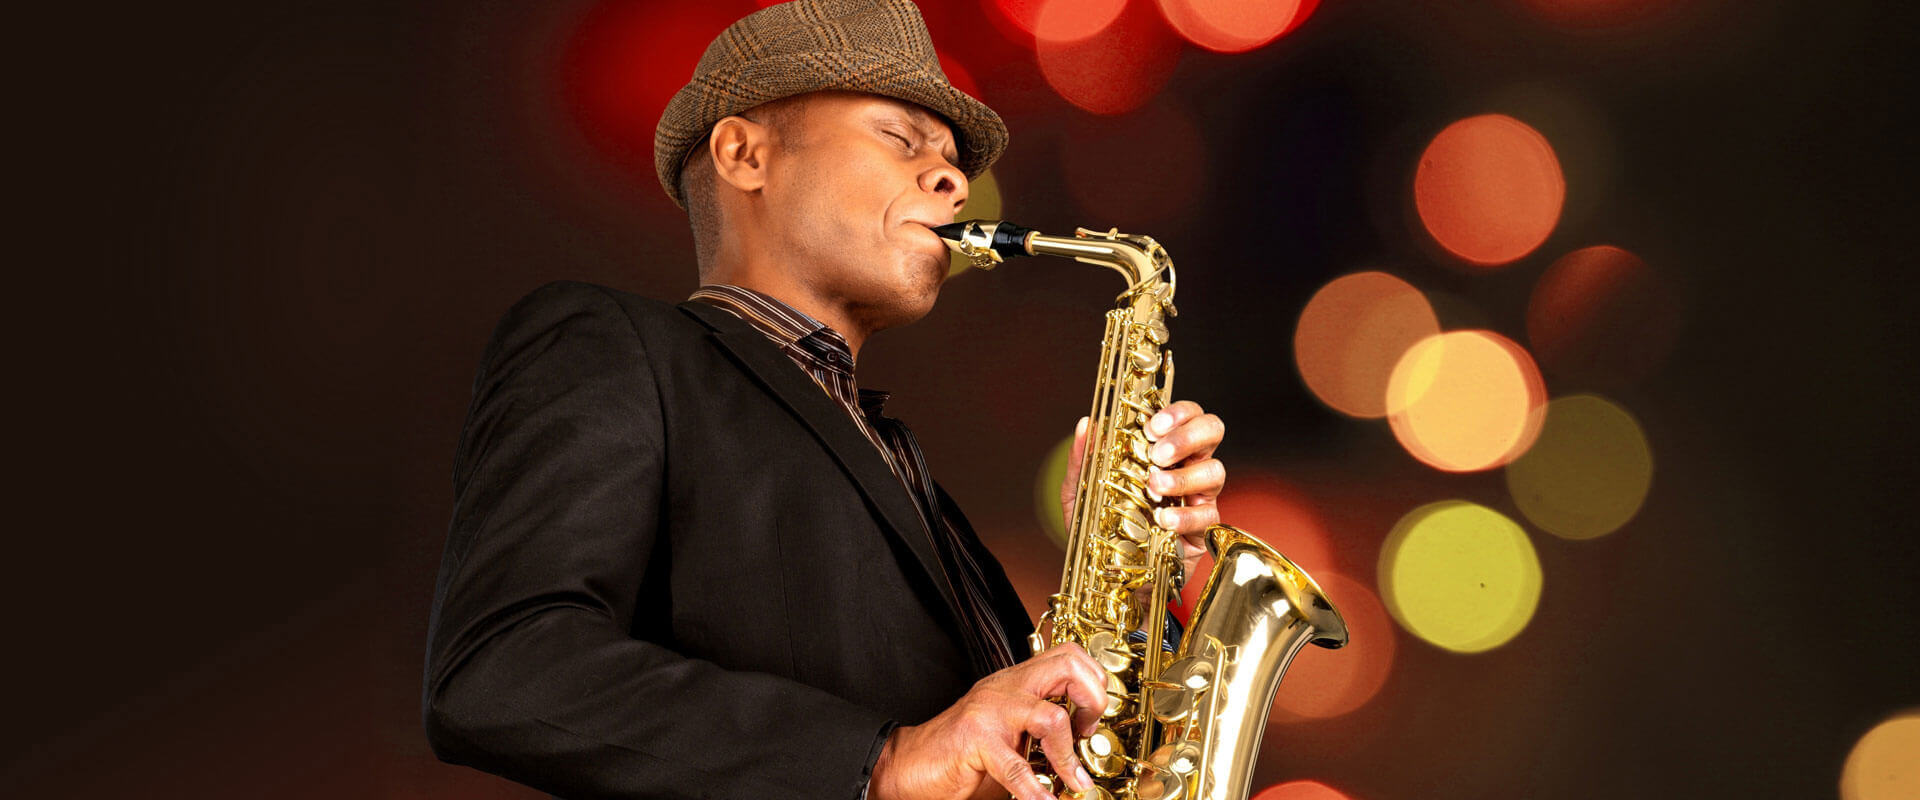 Saxophone Lessons Southampton, NY